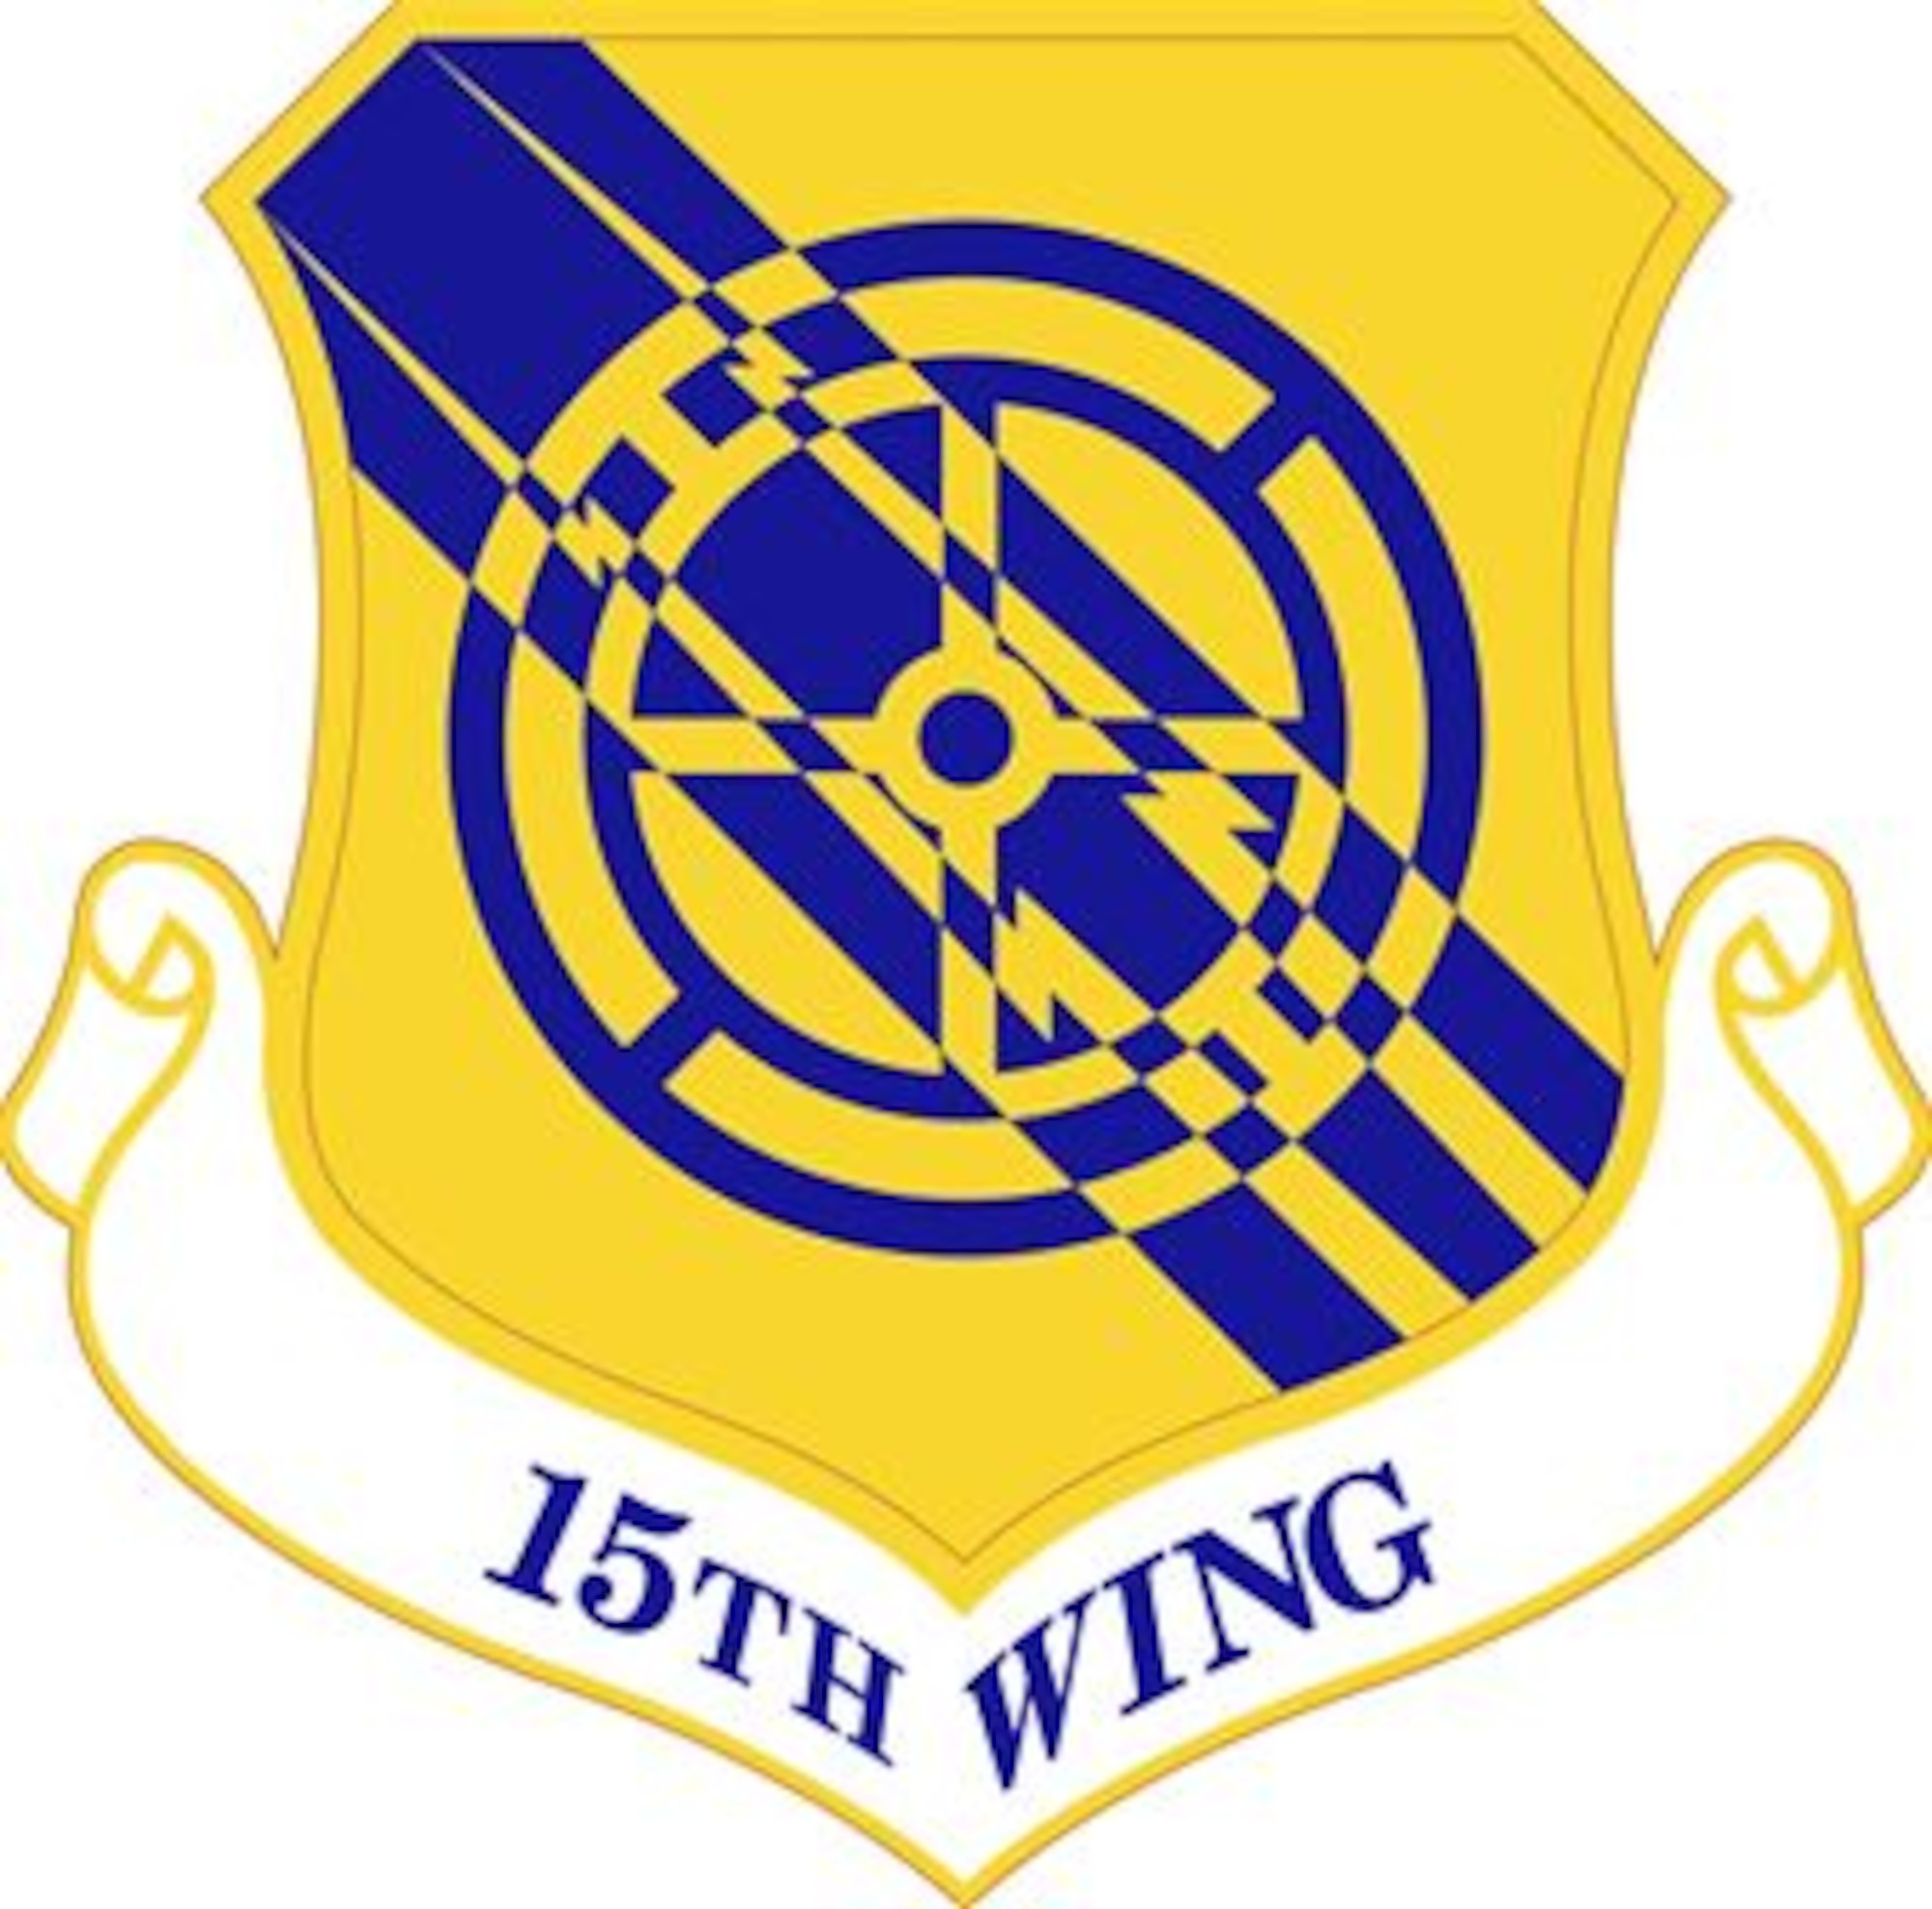 15th Wing logo